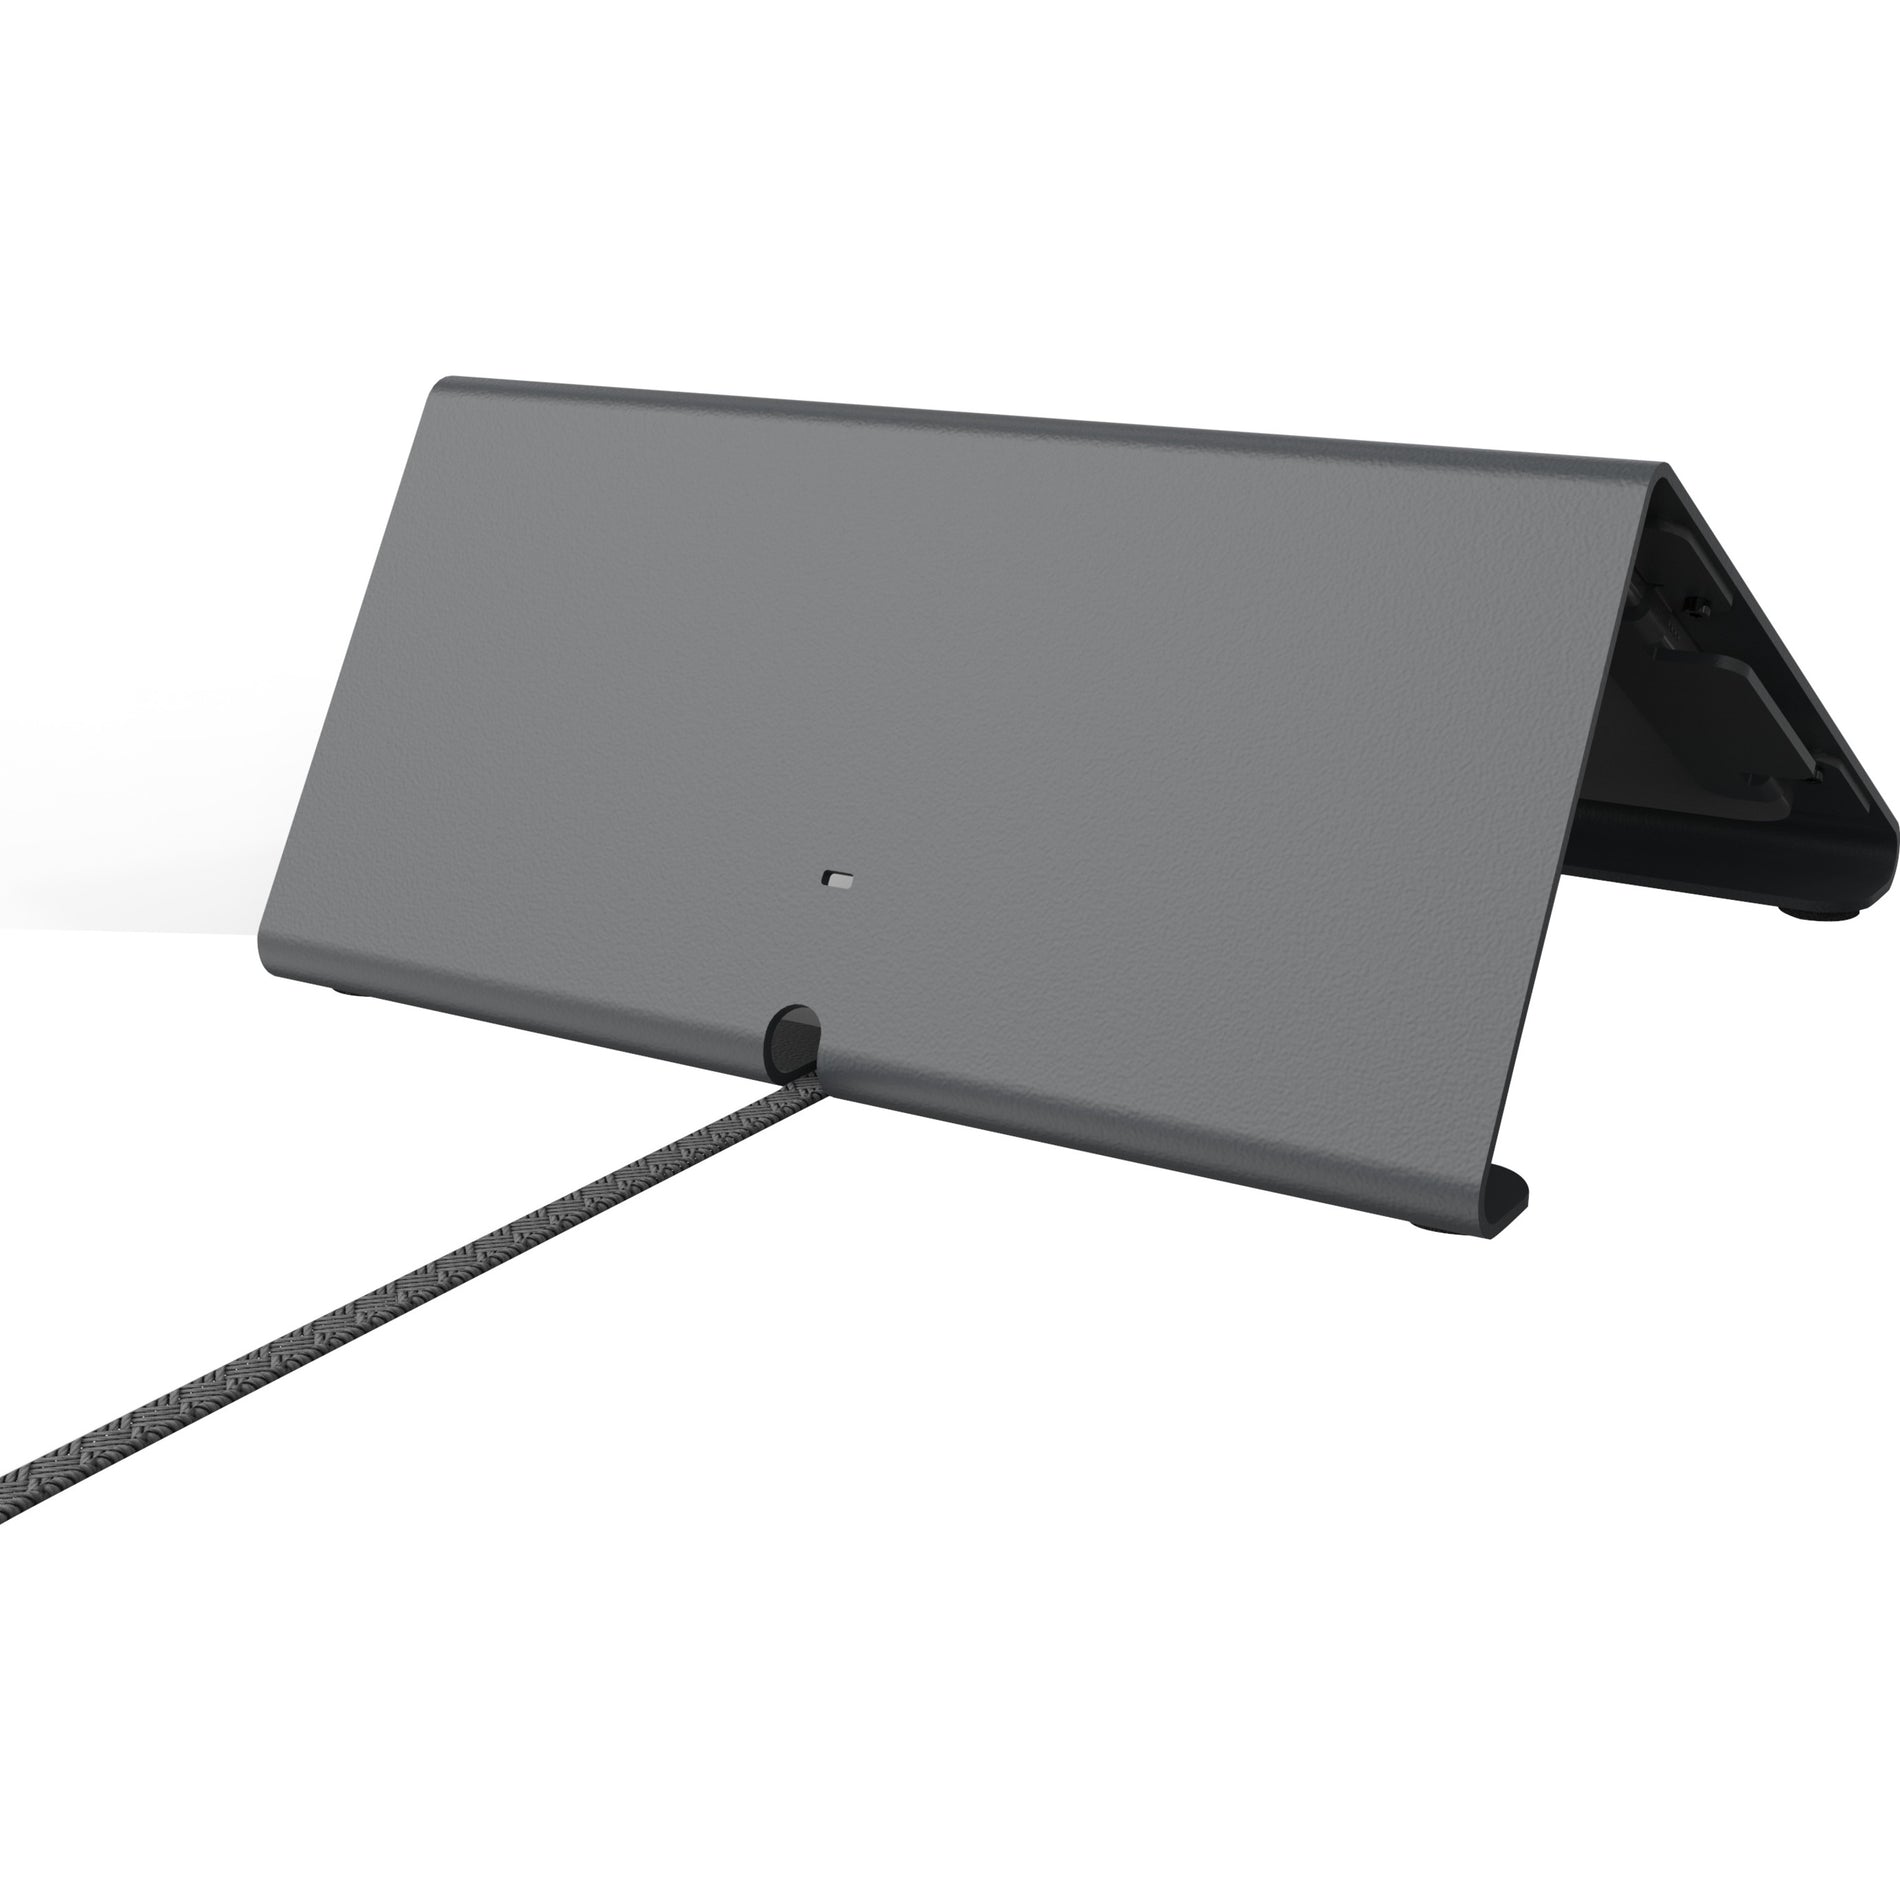 Heckler Design H760-BG Meeting Room Console for iPad 10th Generation - Black Grey, Kensington Slot, Durable, Cable Management